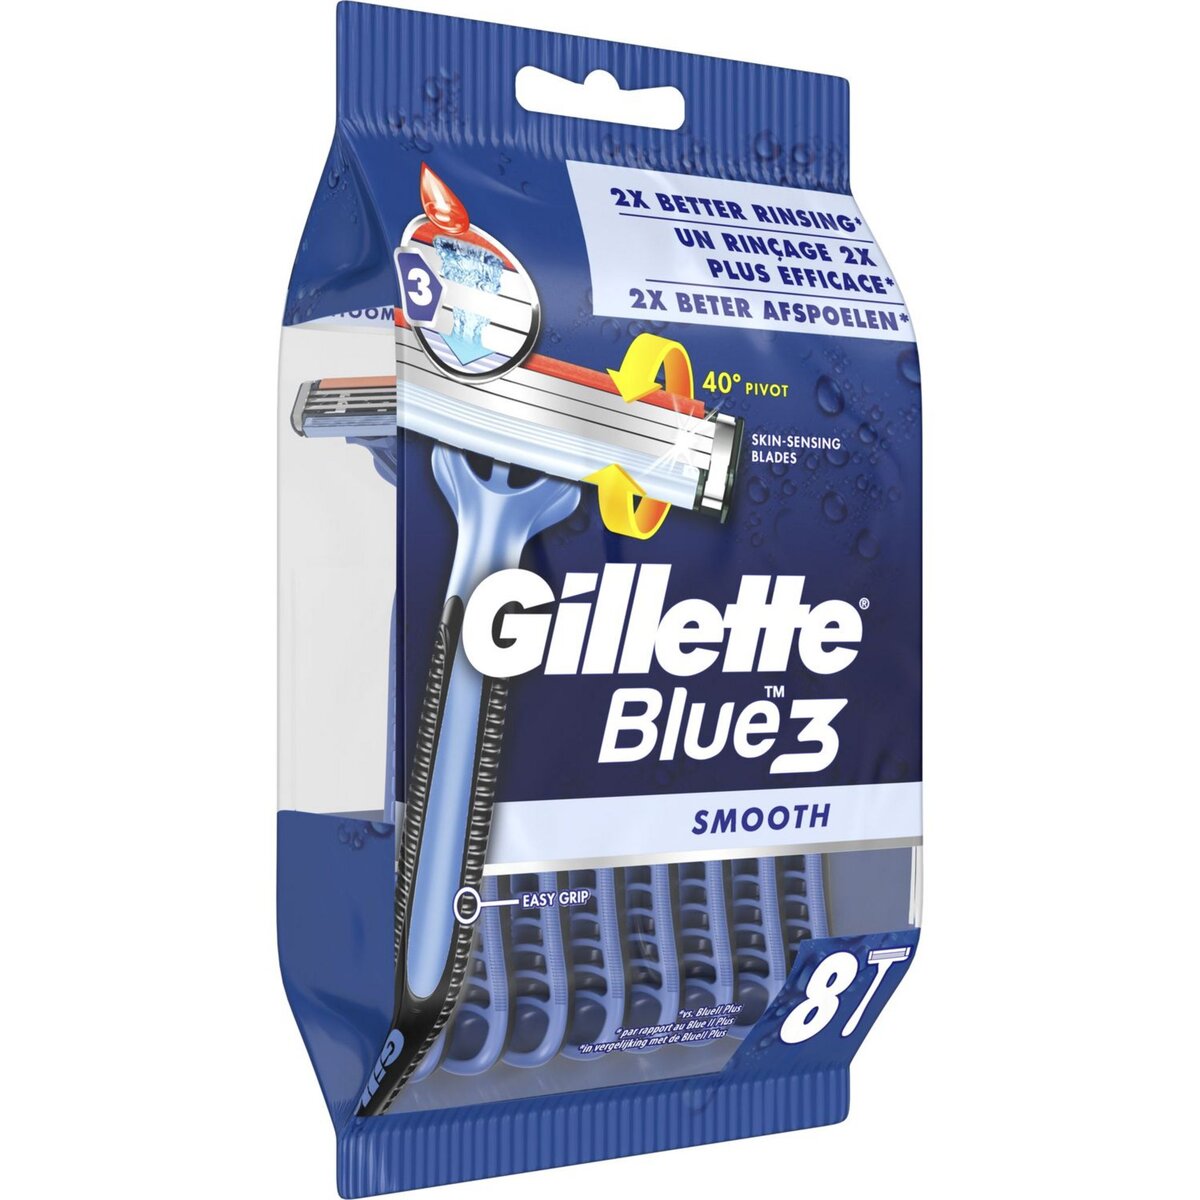 GILLETTE Blue3 rasoirs jetables tête pivotante 24 rasoirs